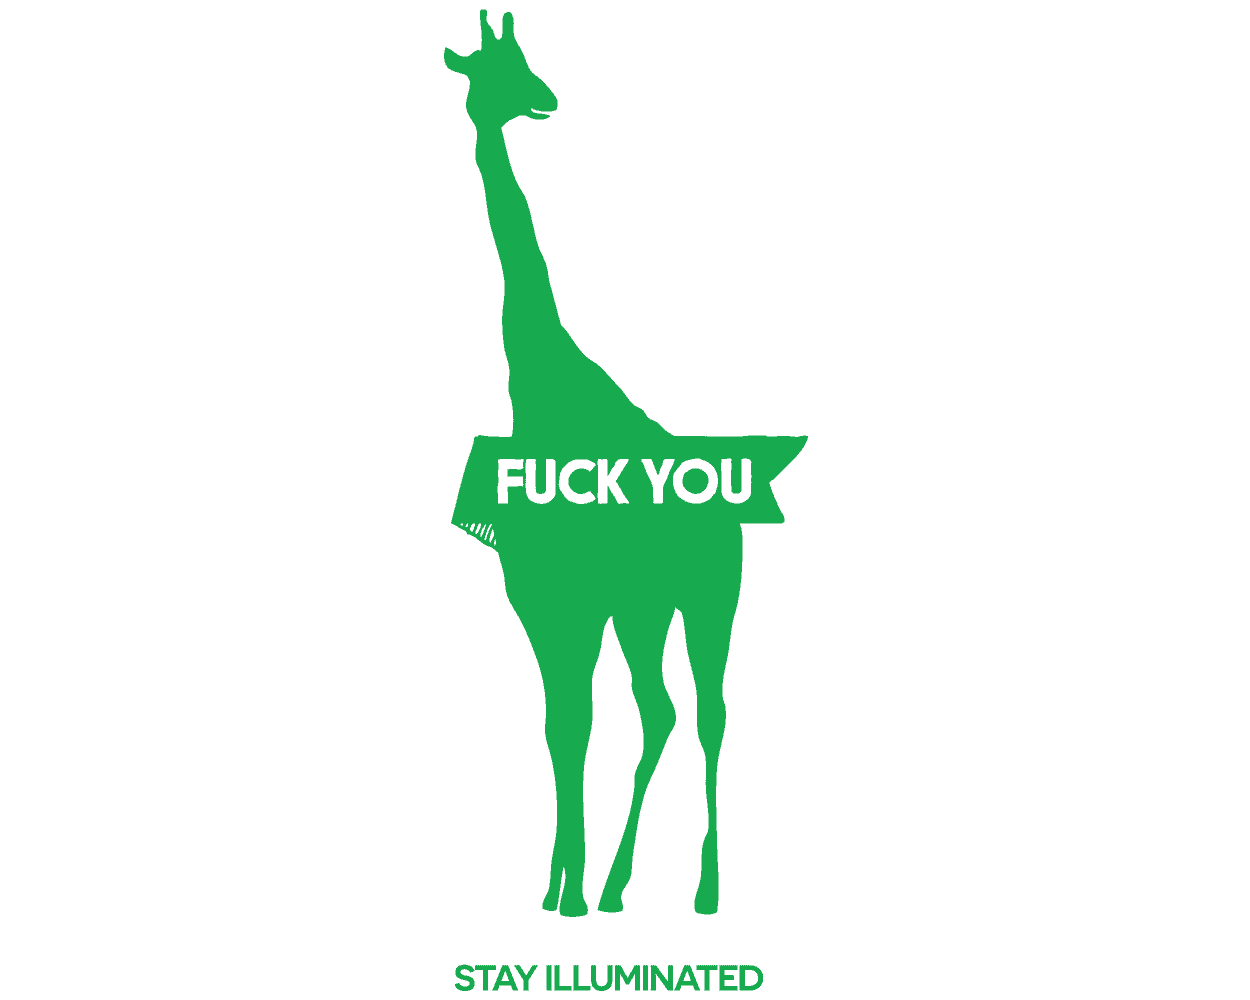 stay ill - fuck you animal series - tshirt design - giraffe